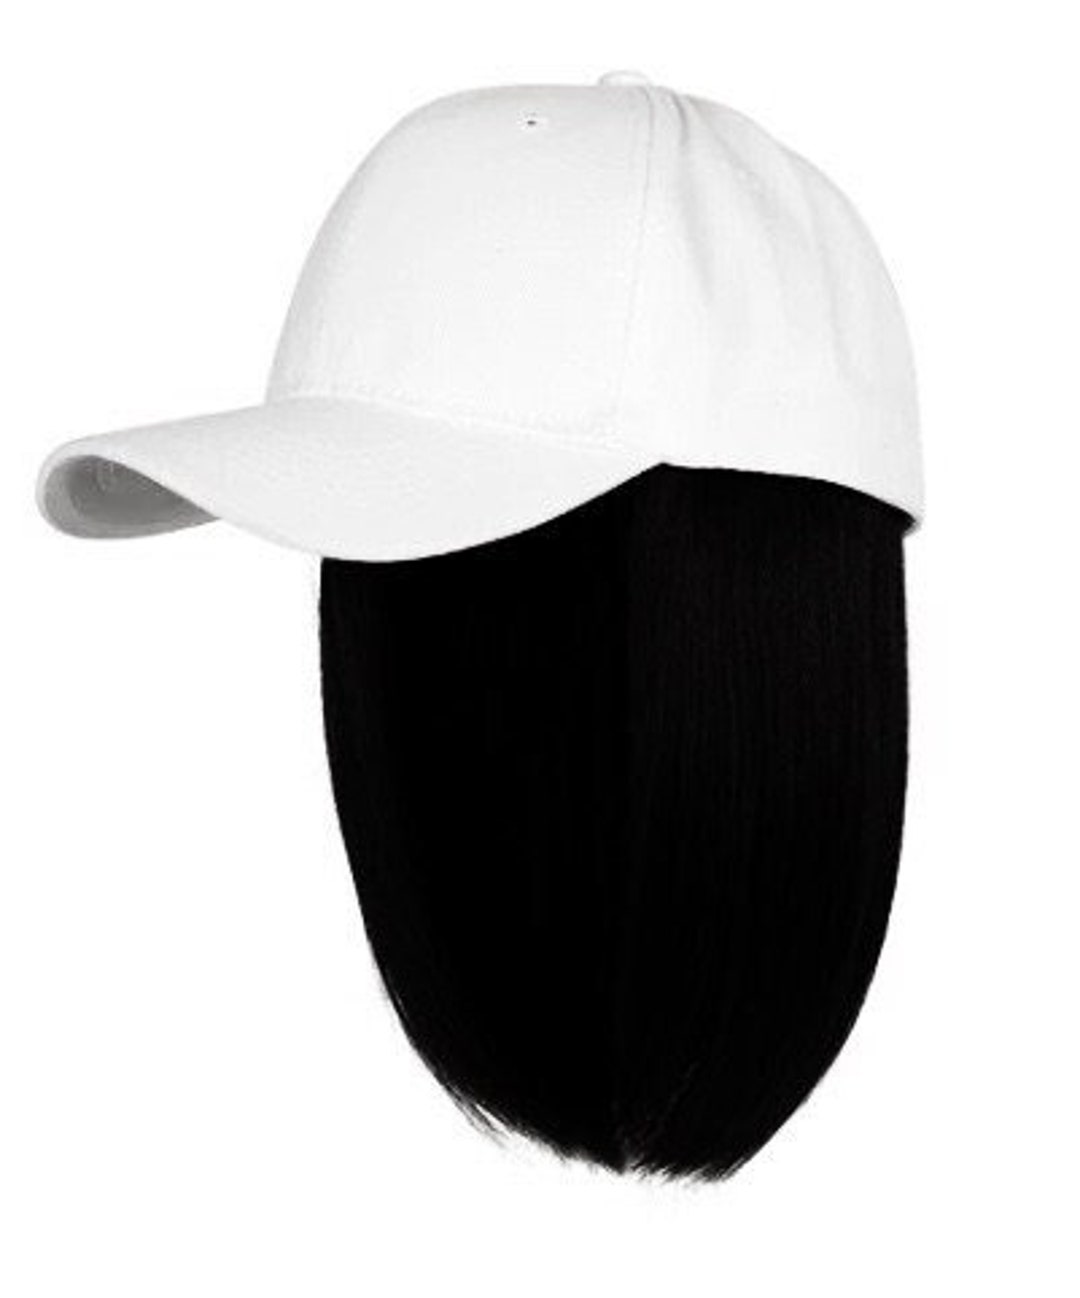 Baseball Cap Wigs black Hair - Etsy